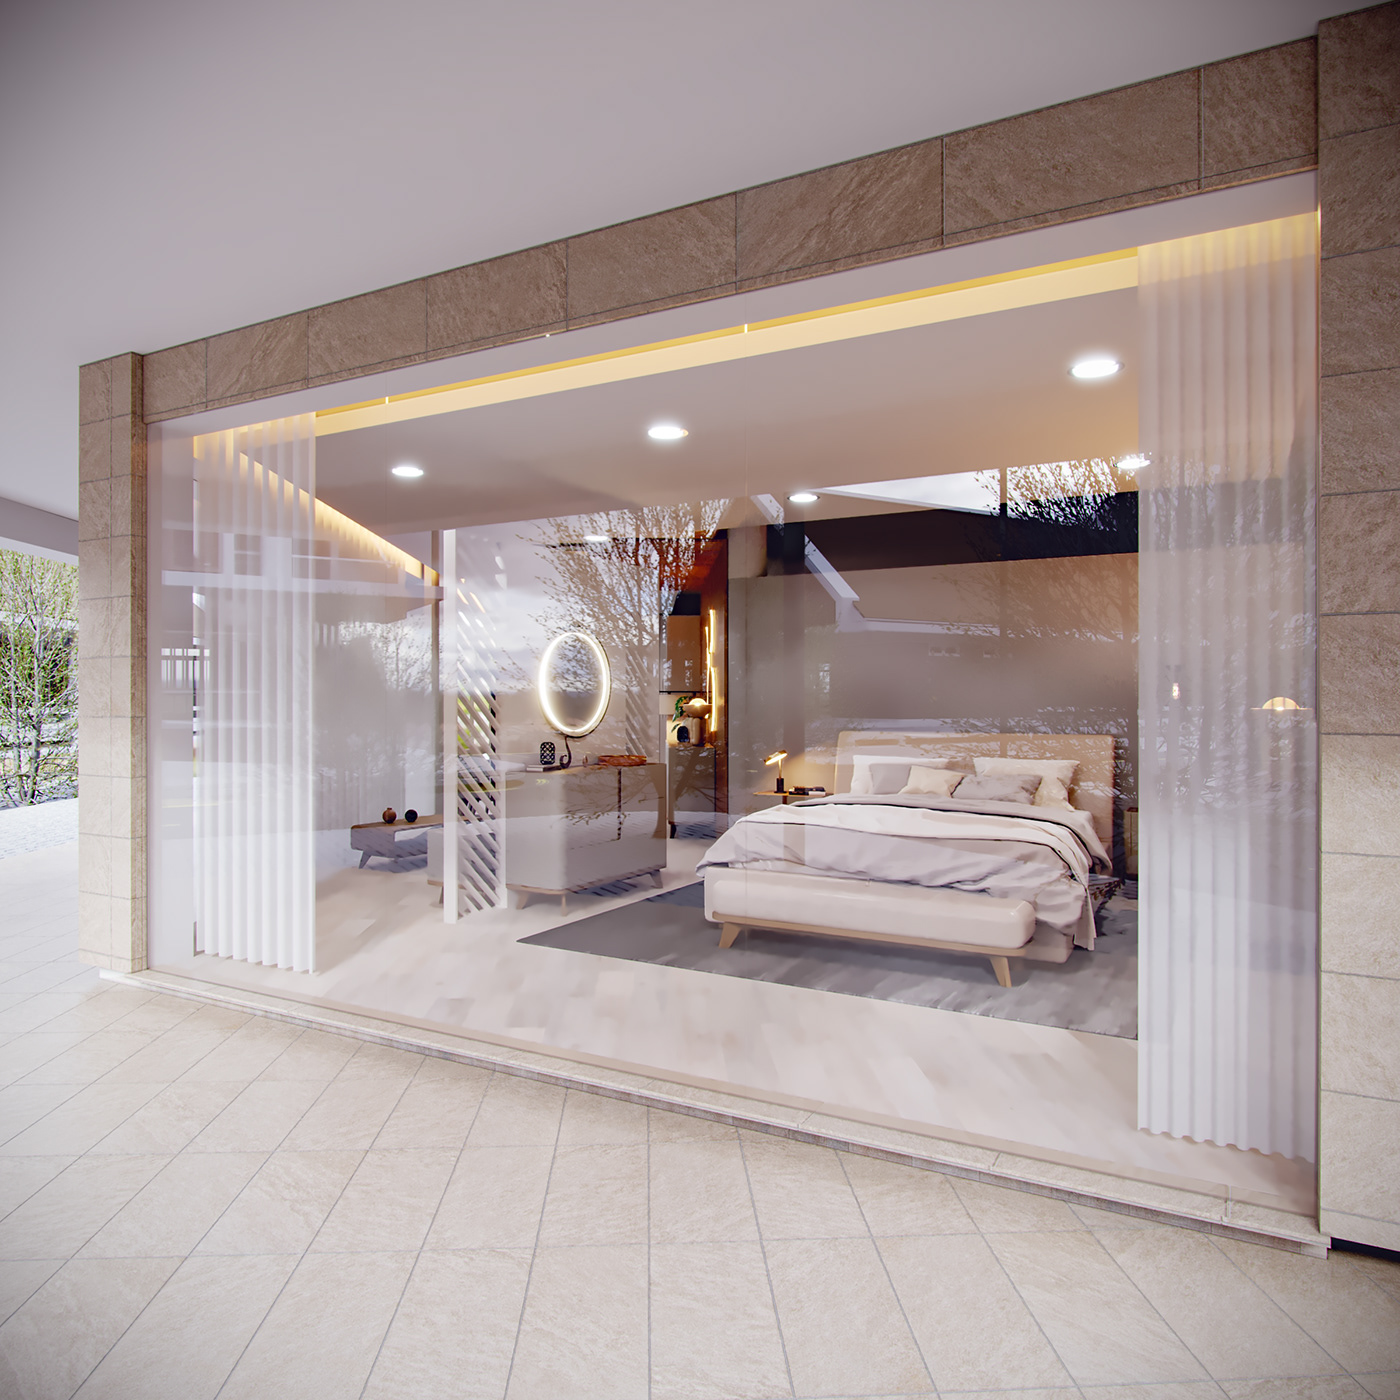 visualization 3ds max corona Render interior design  archviz